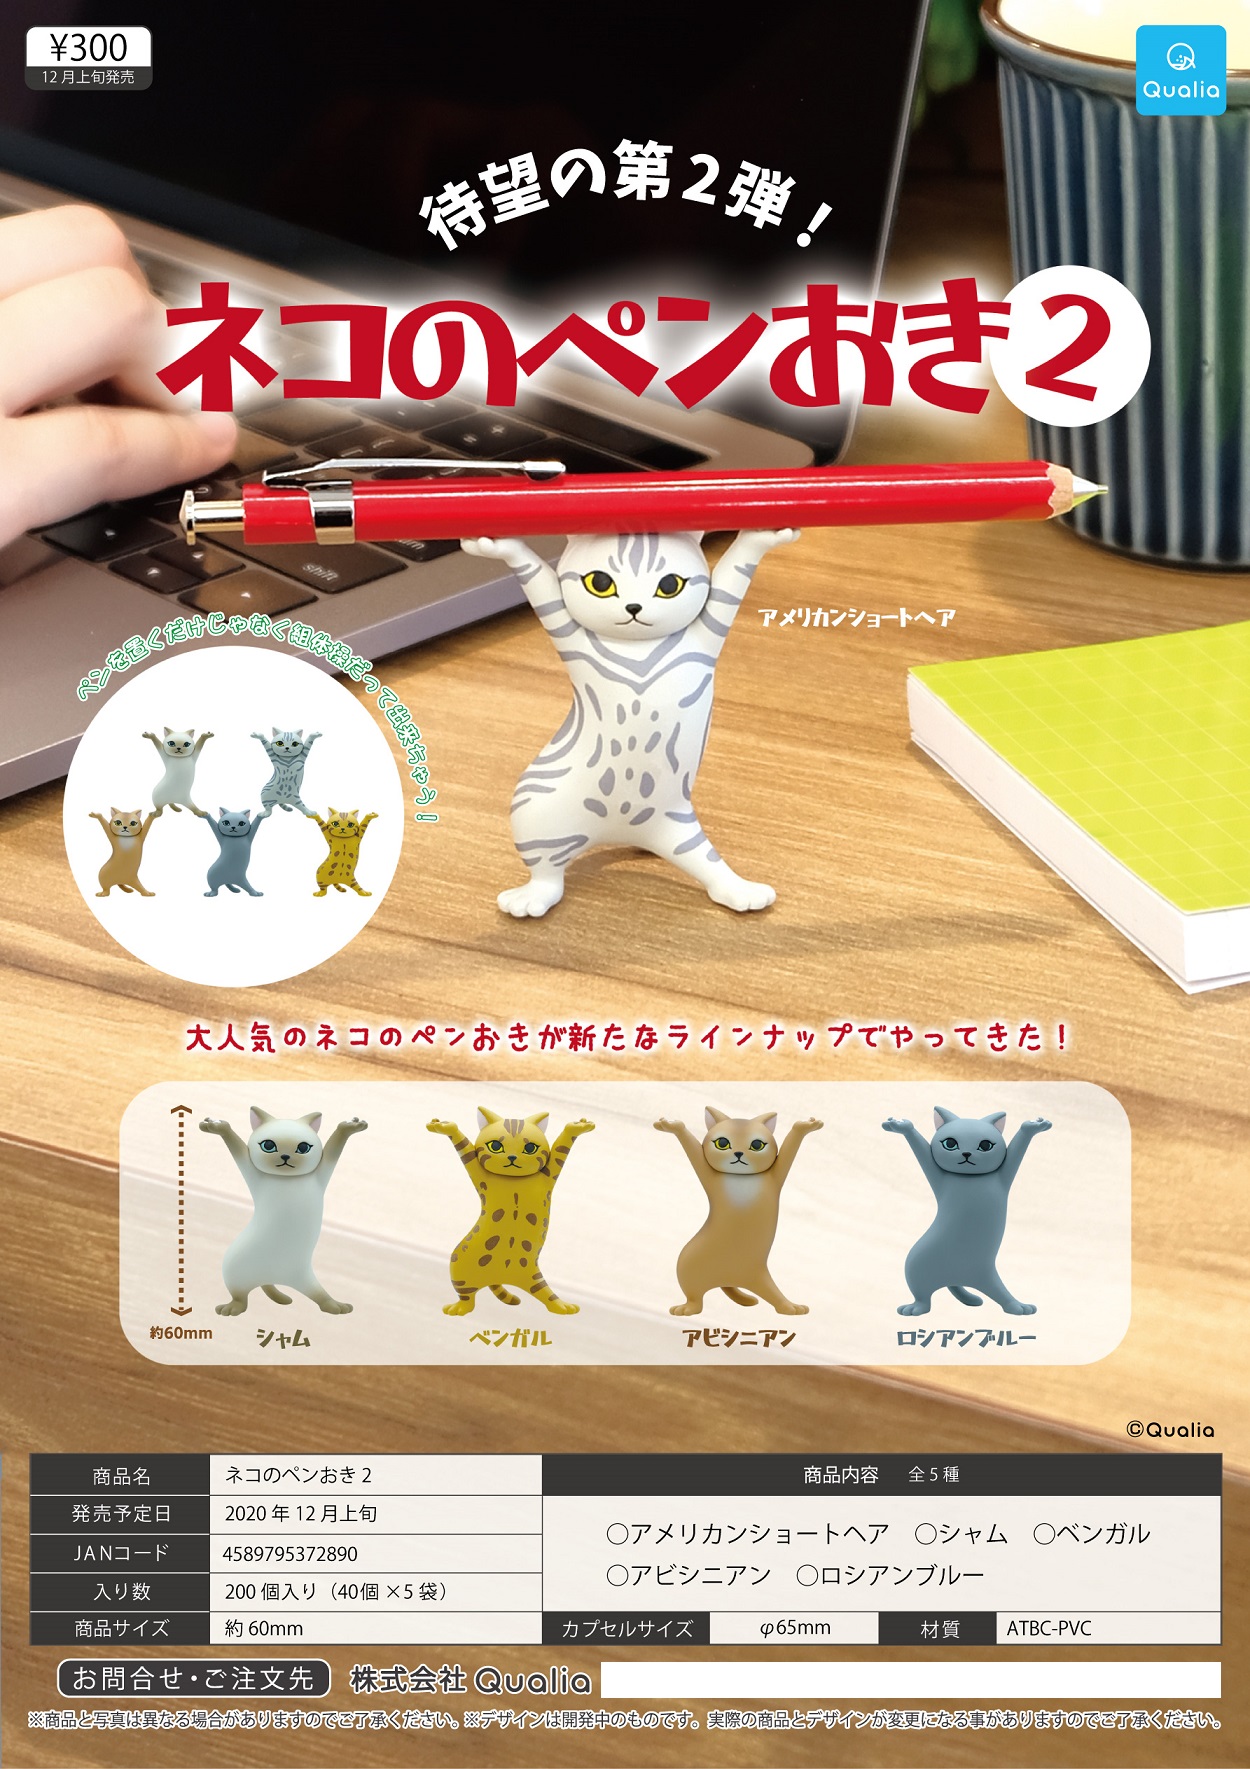 【B】300日元扭蛋 小手办 猫咪置笔架 第2弹 全5种 (1袋40个) 372890